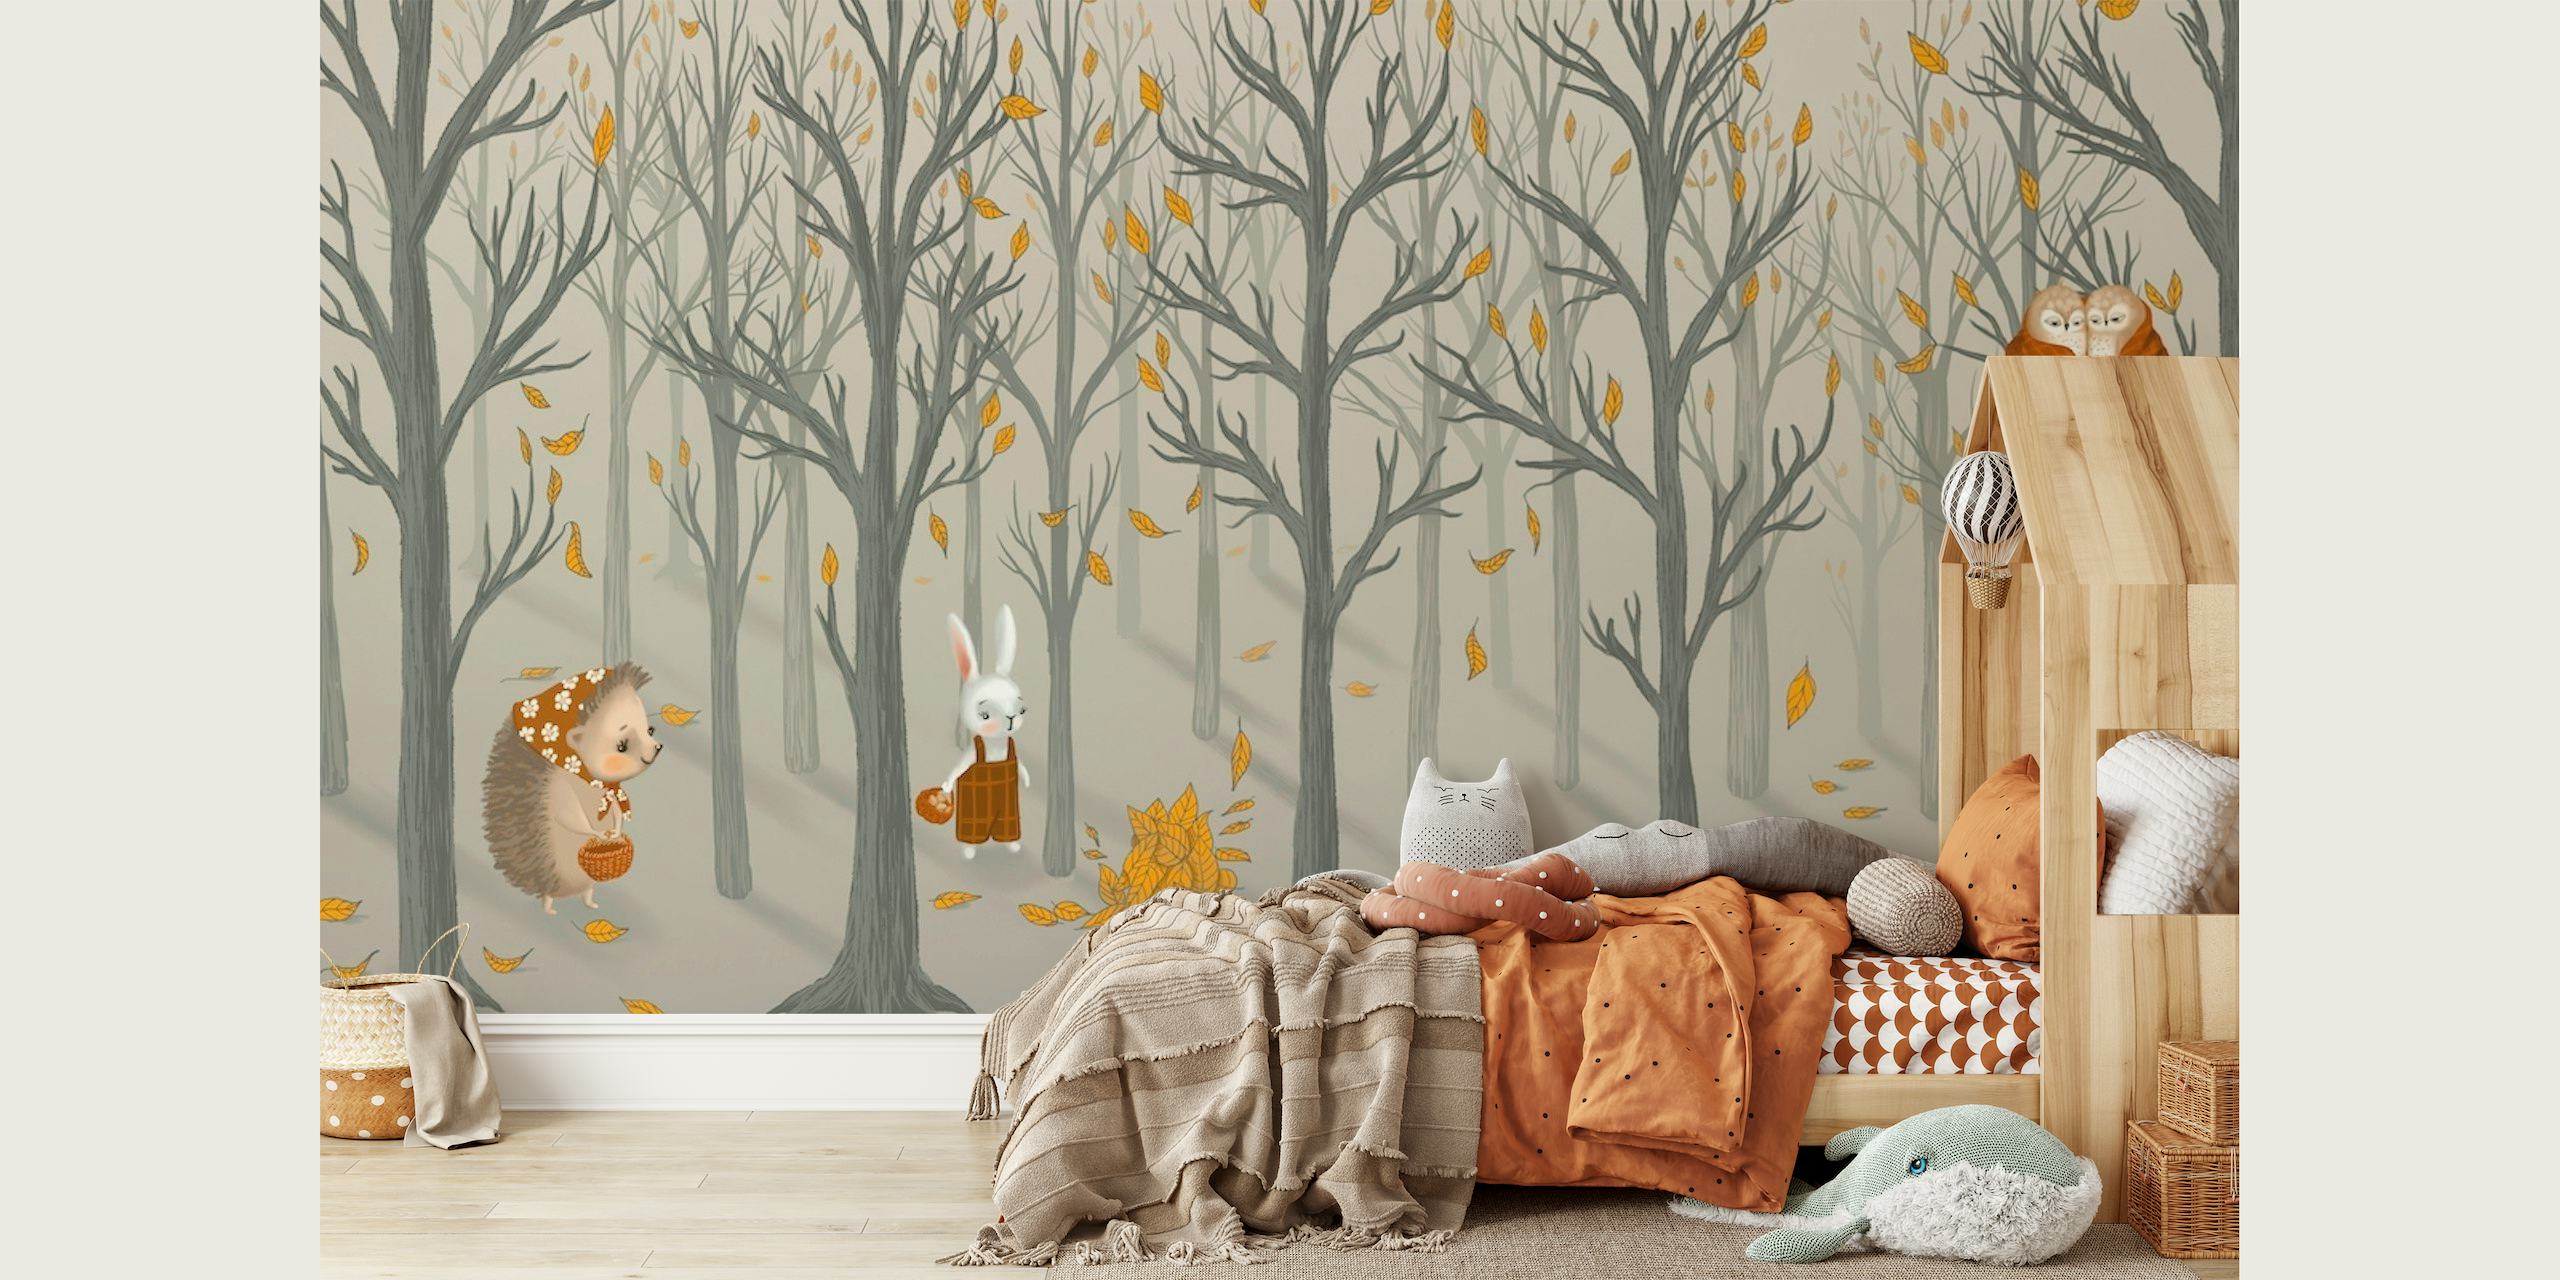 Autumn forest friends papel pintado